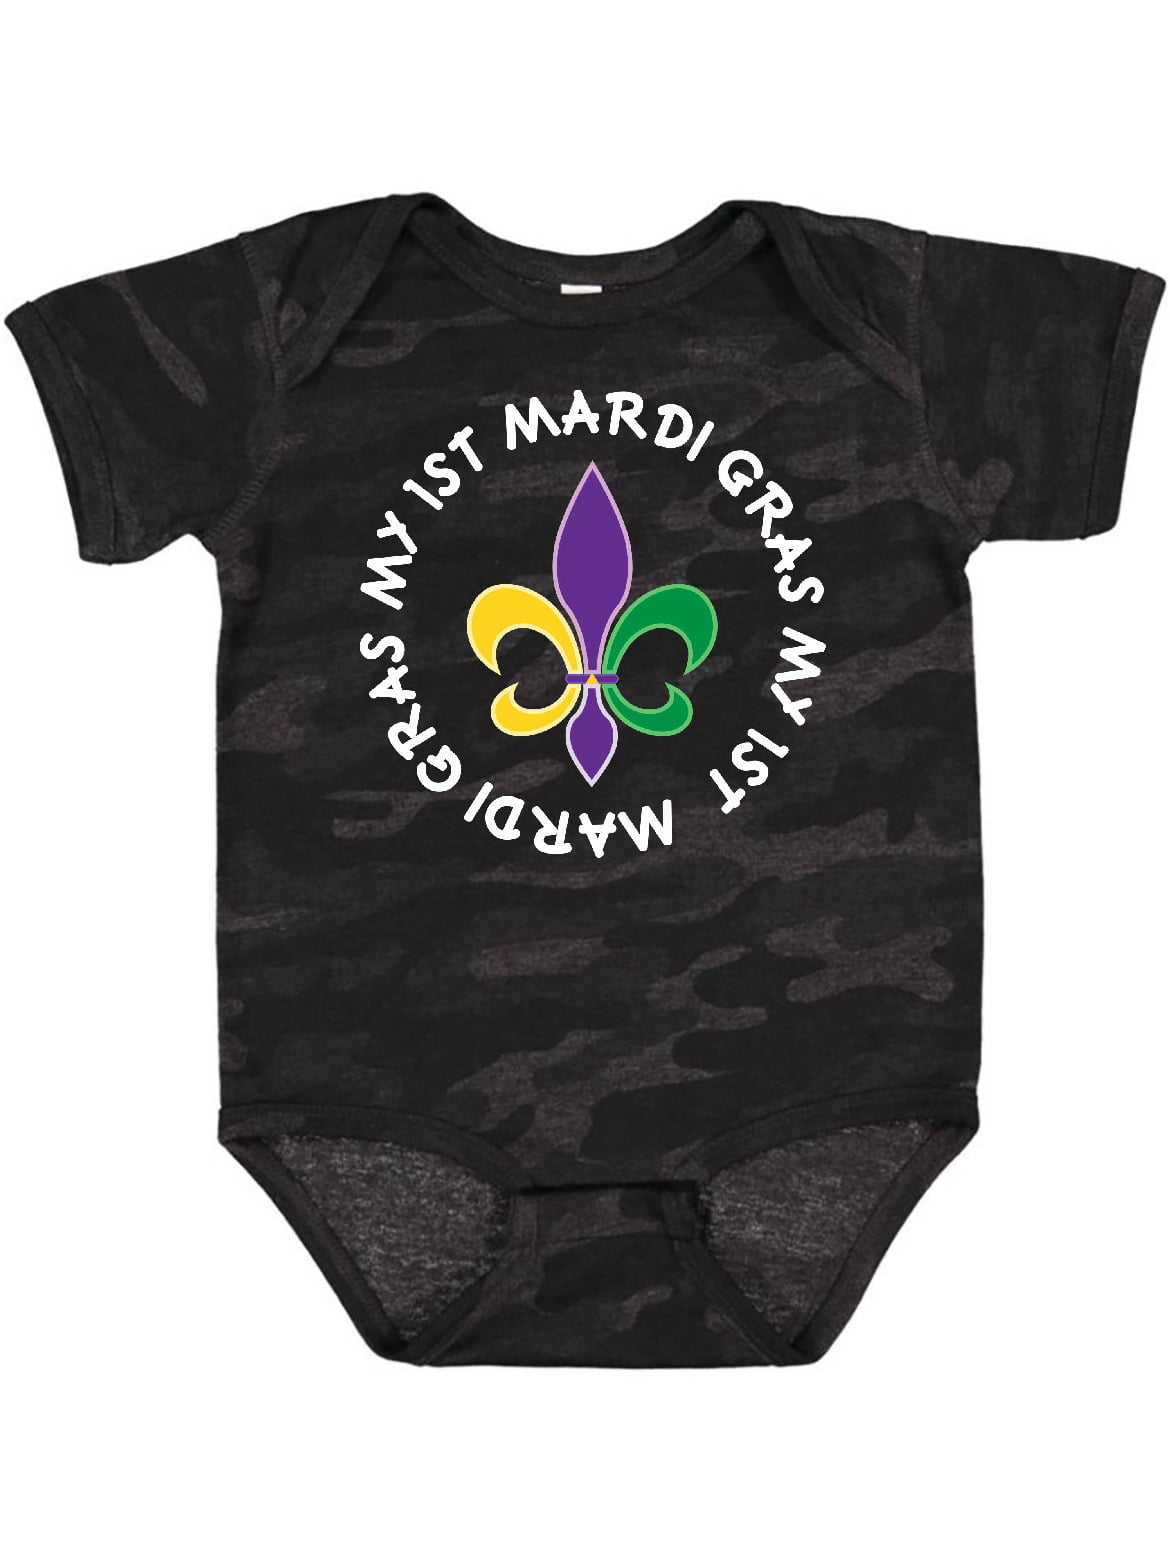 Baby Kids I Love Mardi Gras Heart Fluer De Lis Onesies Bodysuits as picture24 Months 